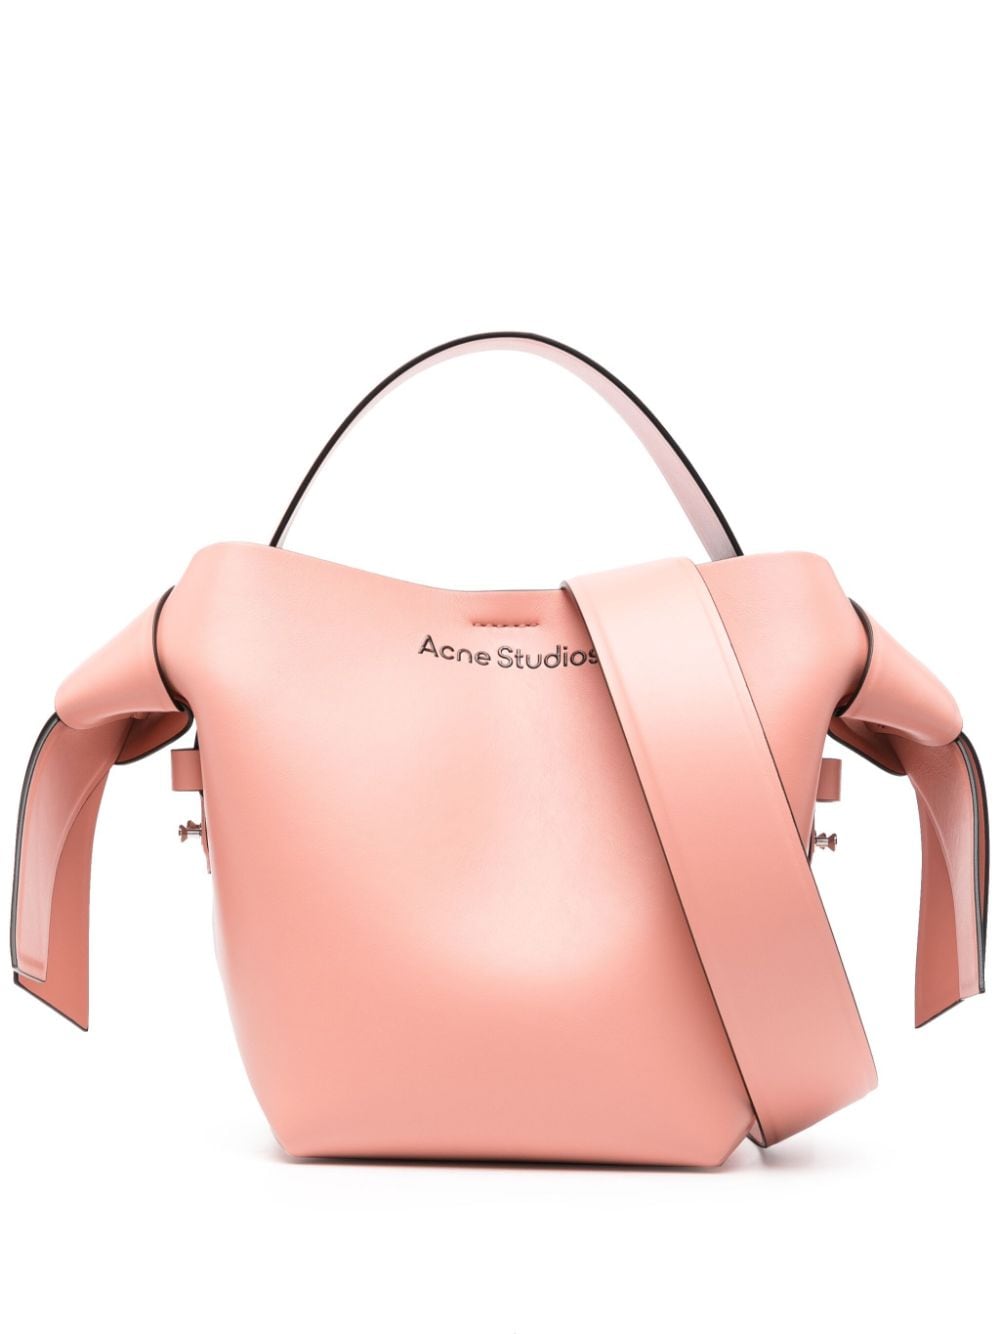 ACNE STUDIOS Salmon Pink Leather Handbag with Single Top Handle and Adjustable Shoulder Strap